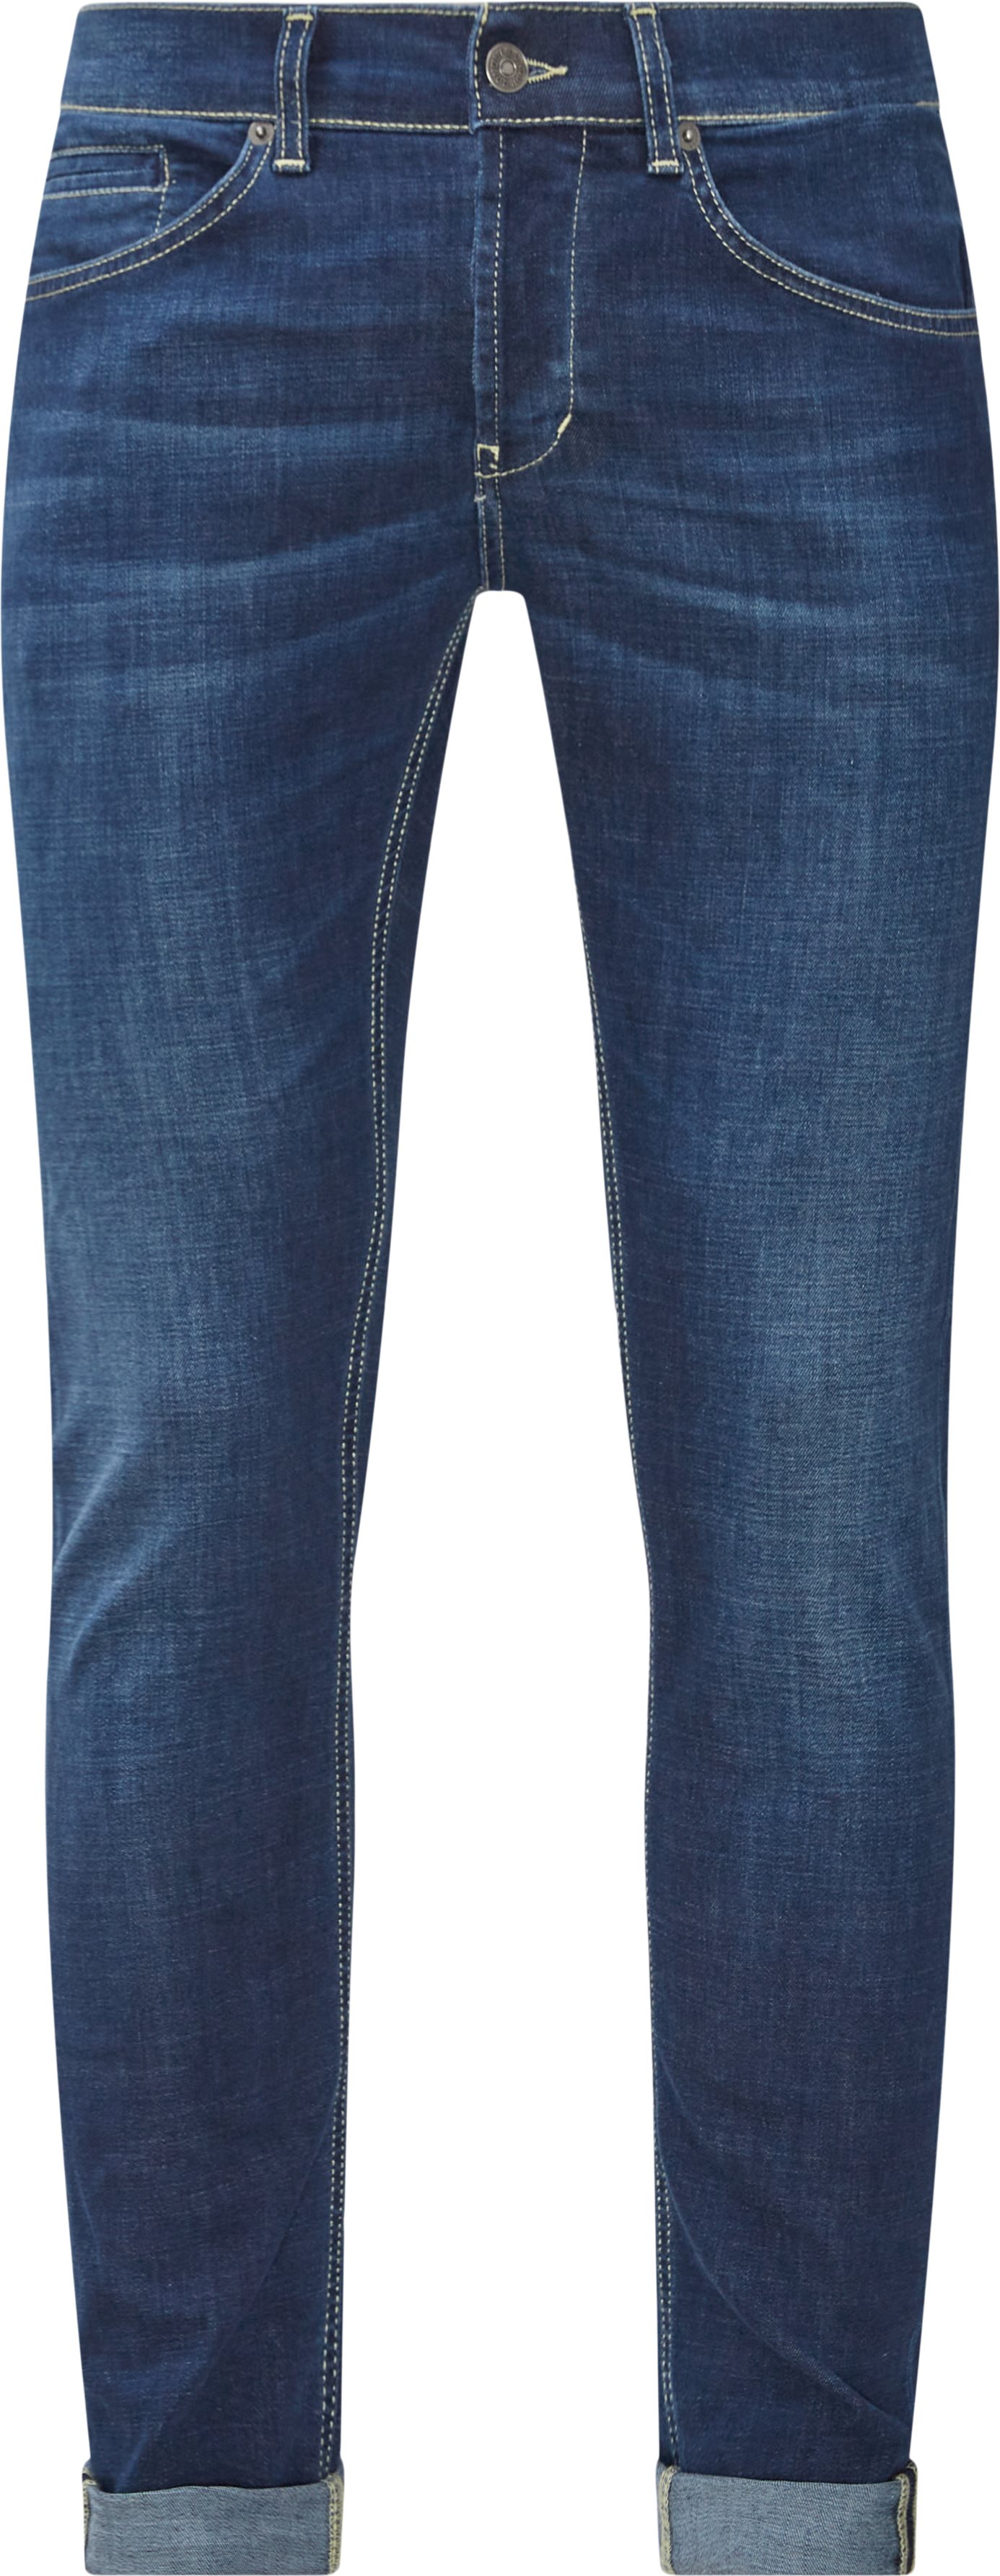 George Jeans - Jeans - Skinny fit - Denim